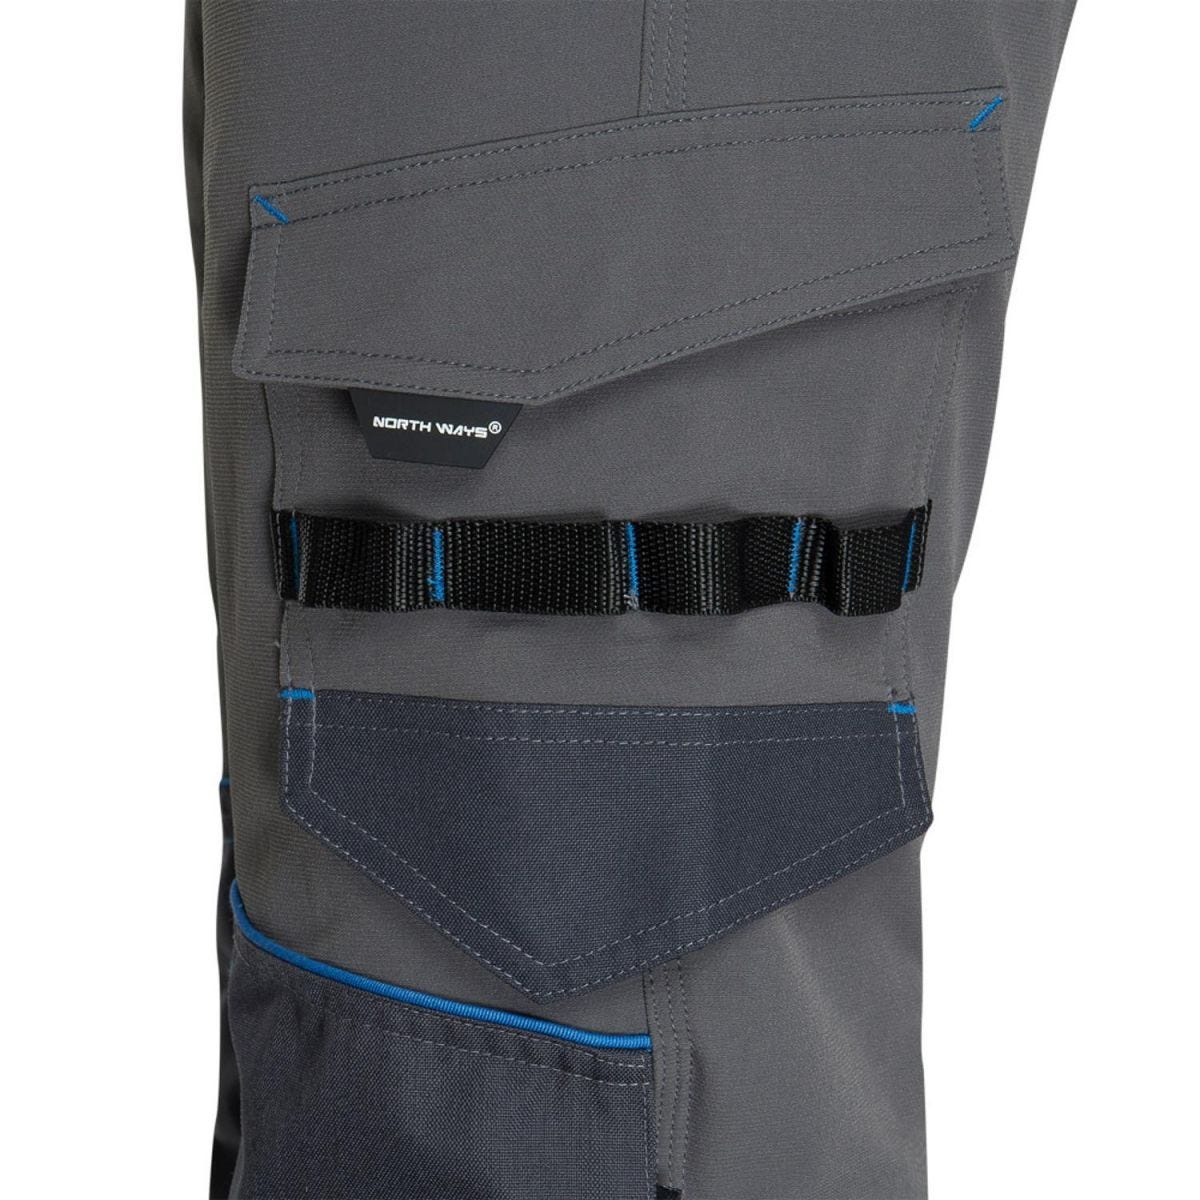 Pantalon de travail SACHA gris/bleu - North Ways - Taille 50 3